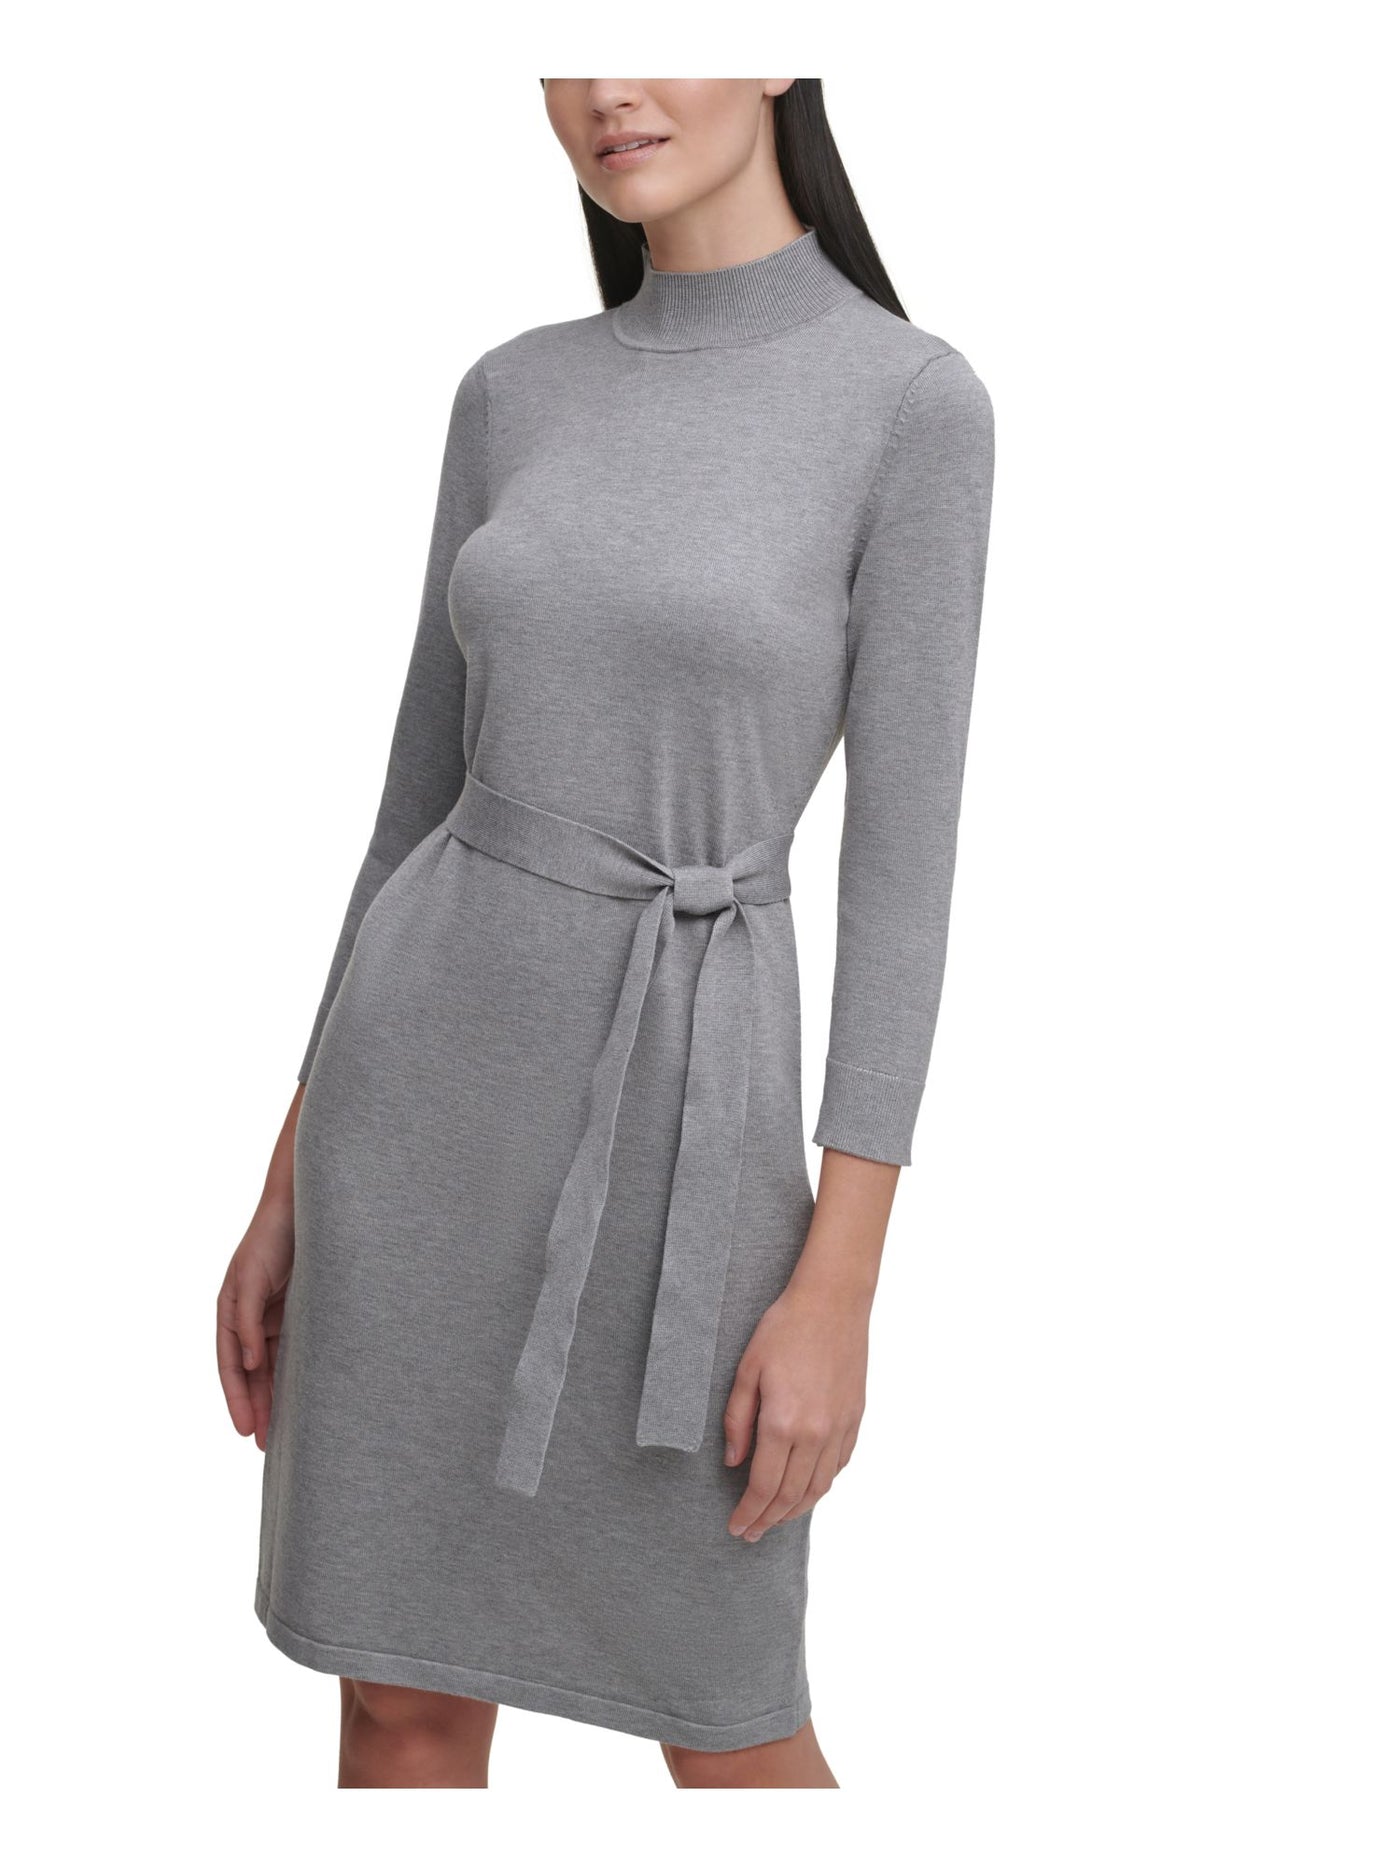 CALVIN KLEIN Womens Gray Tie Zippered Sweater 3/4 Sleeve Mock Above The Knee Evening Sheath Dress L